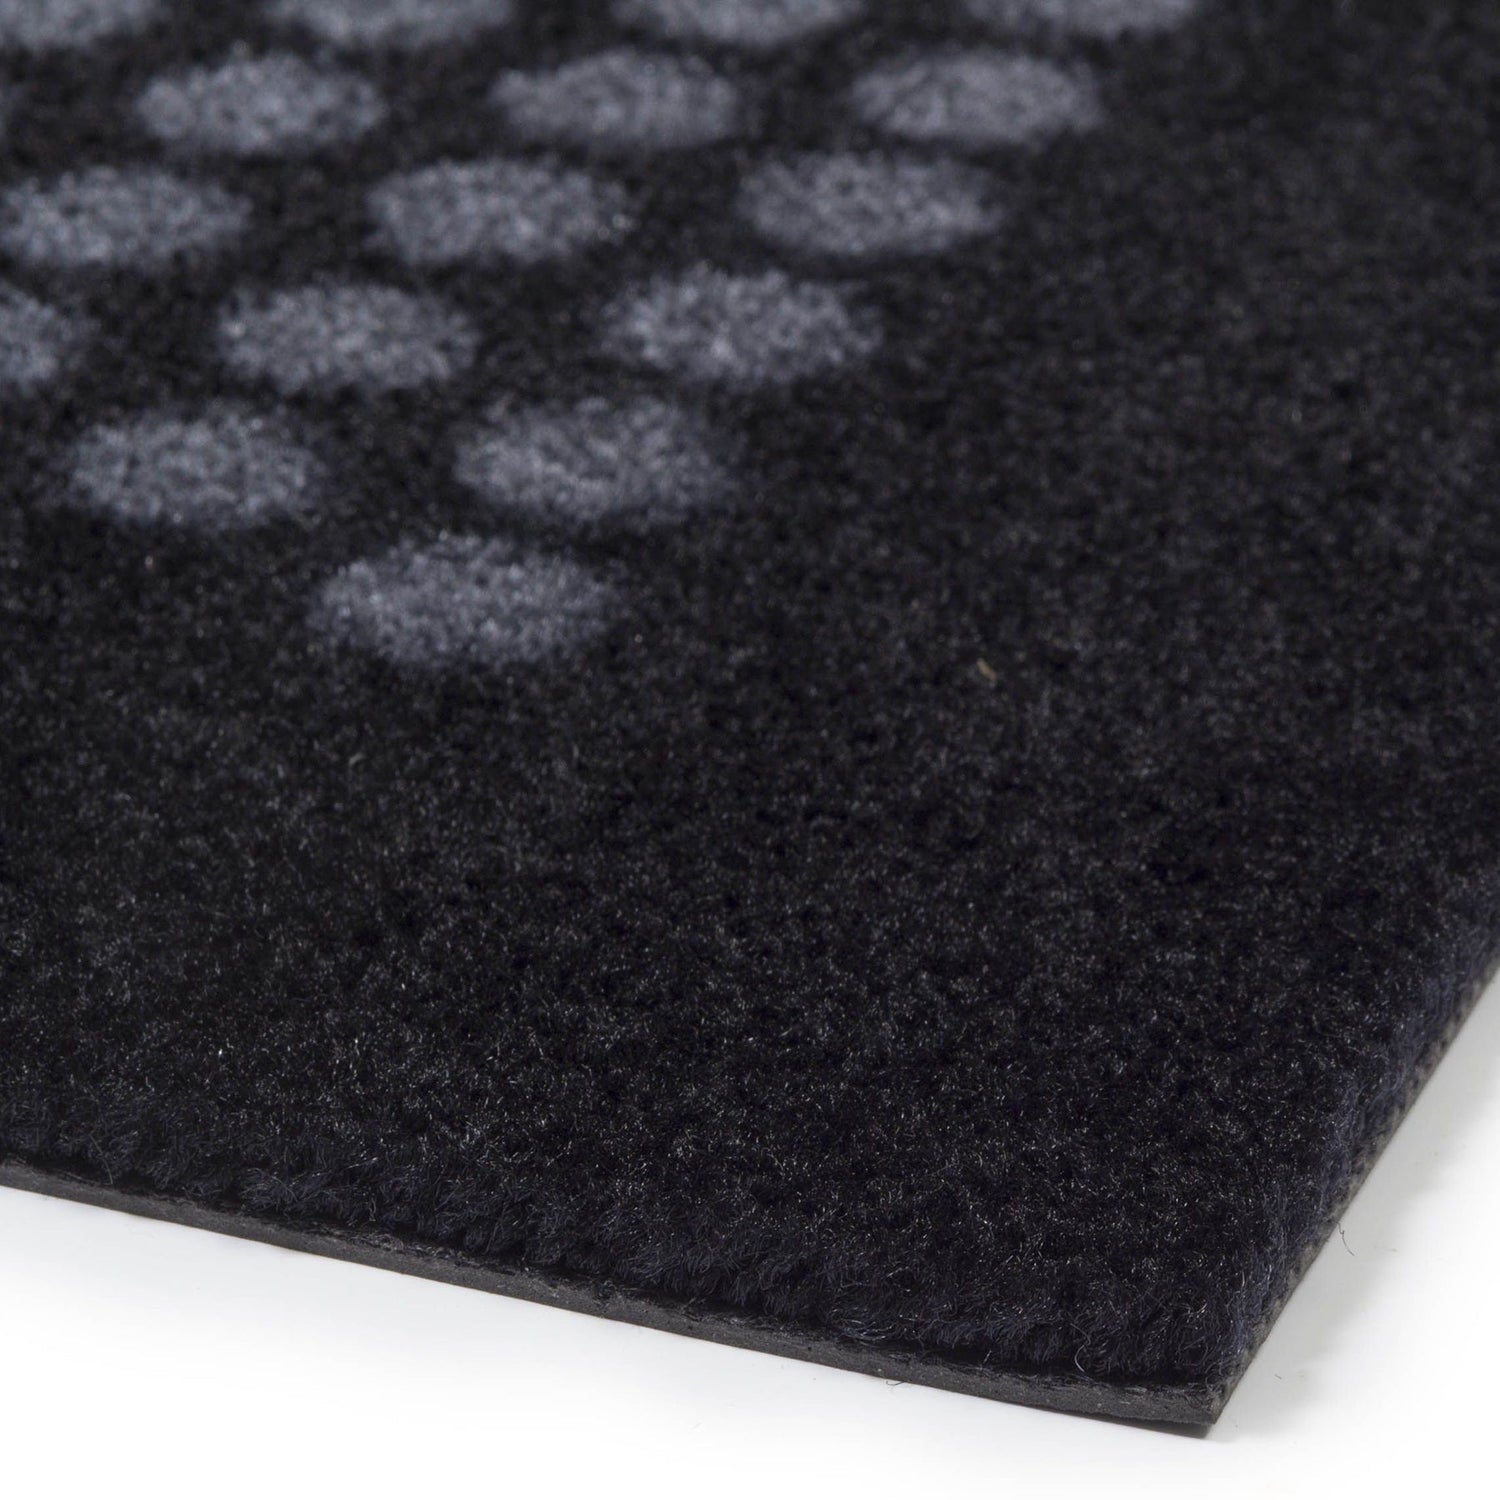 Floor mat 90 x 130 cm - dots/black gray